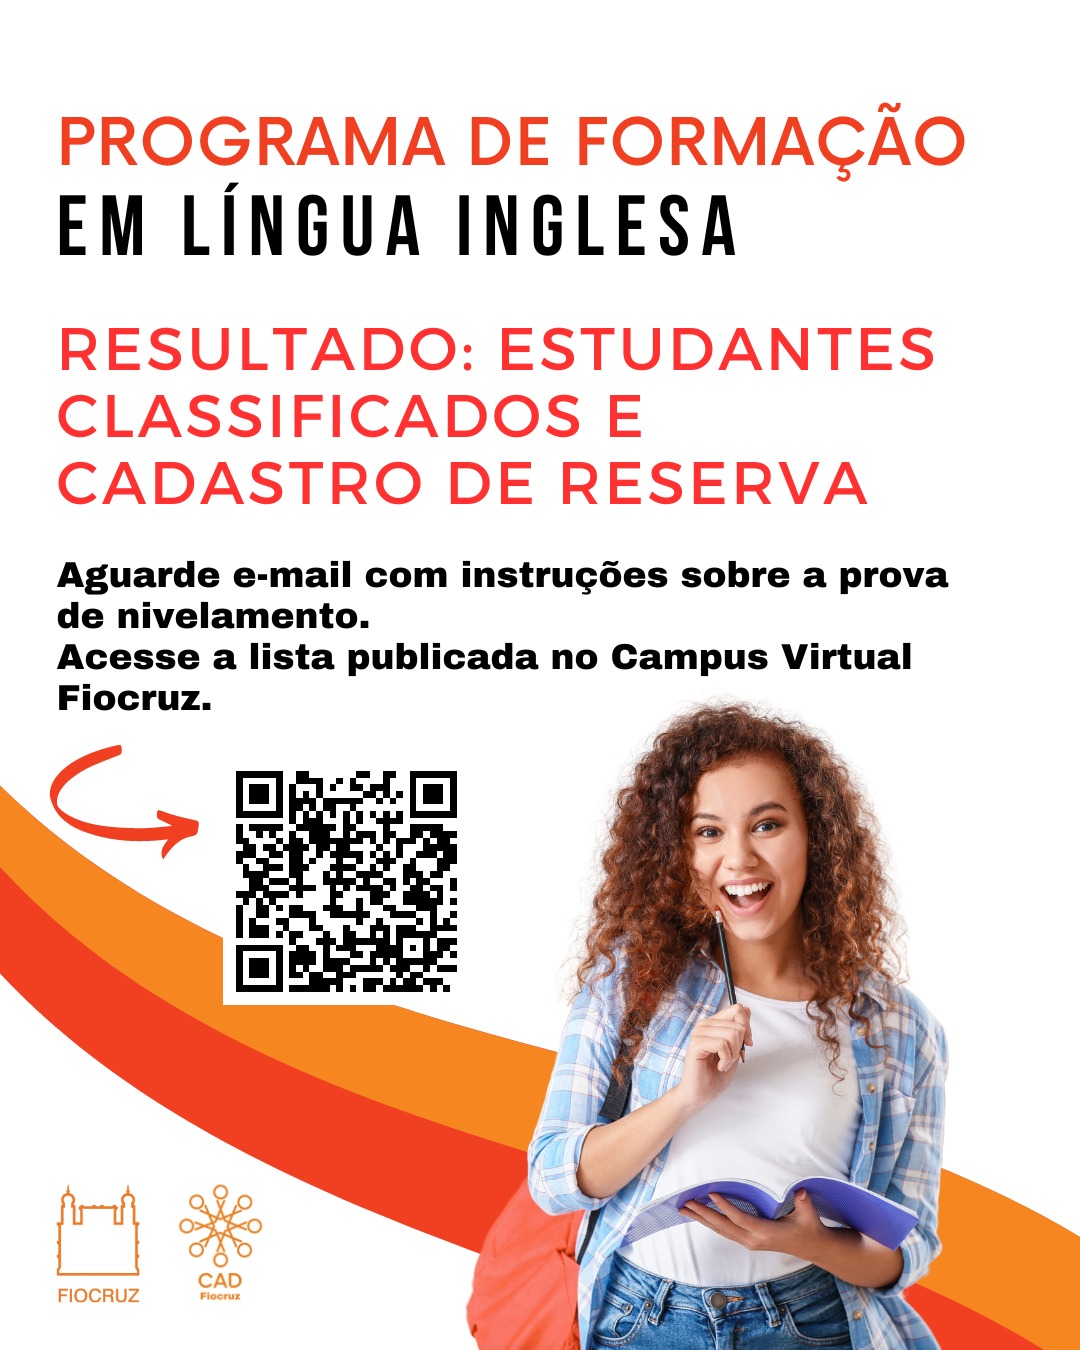 Evento virtual gratuito reunirá professores de língua inglesa de